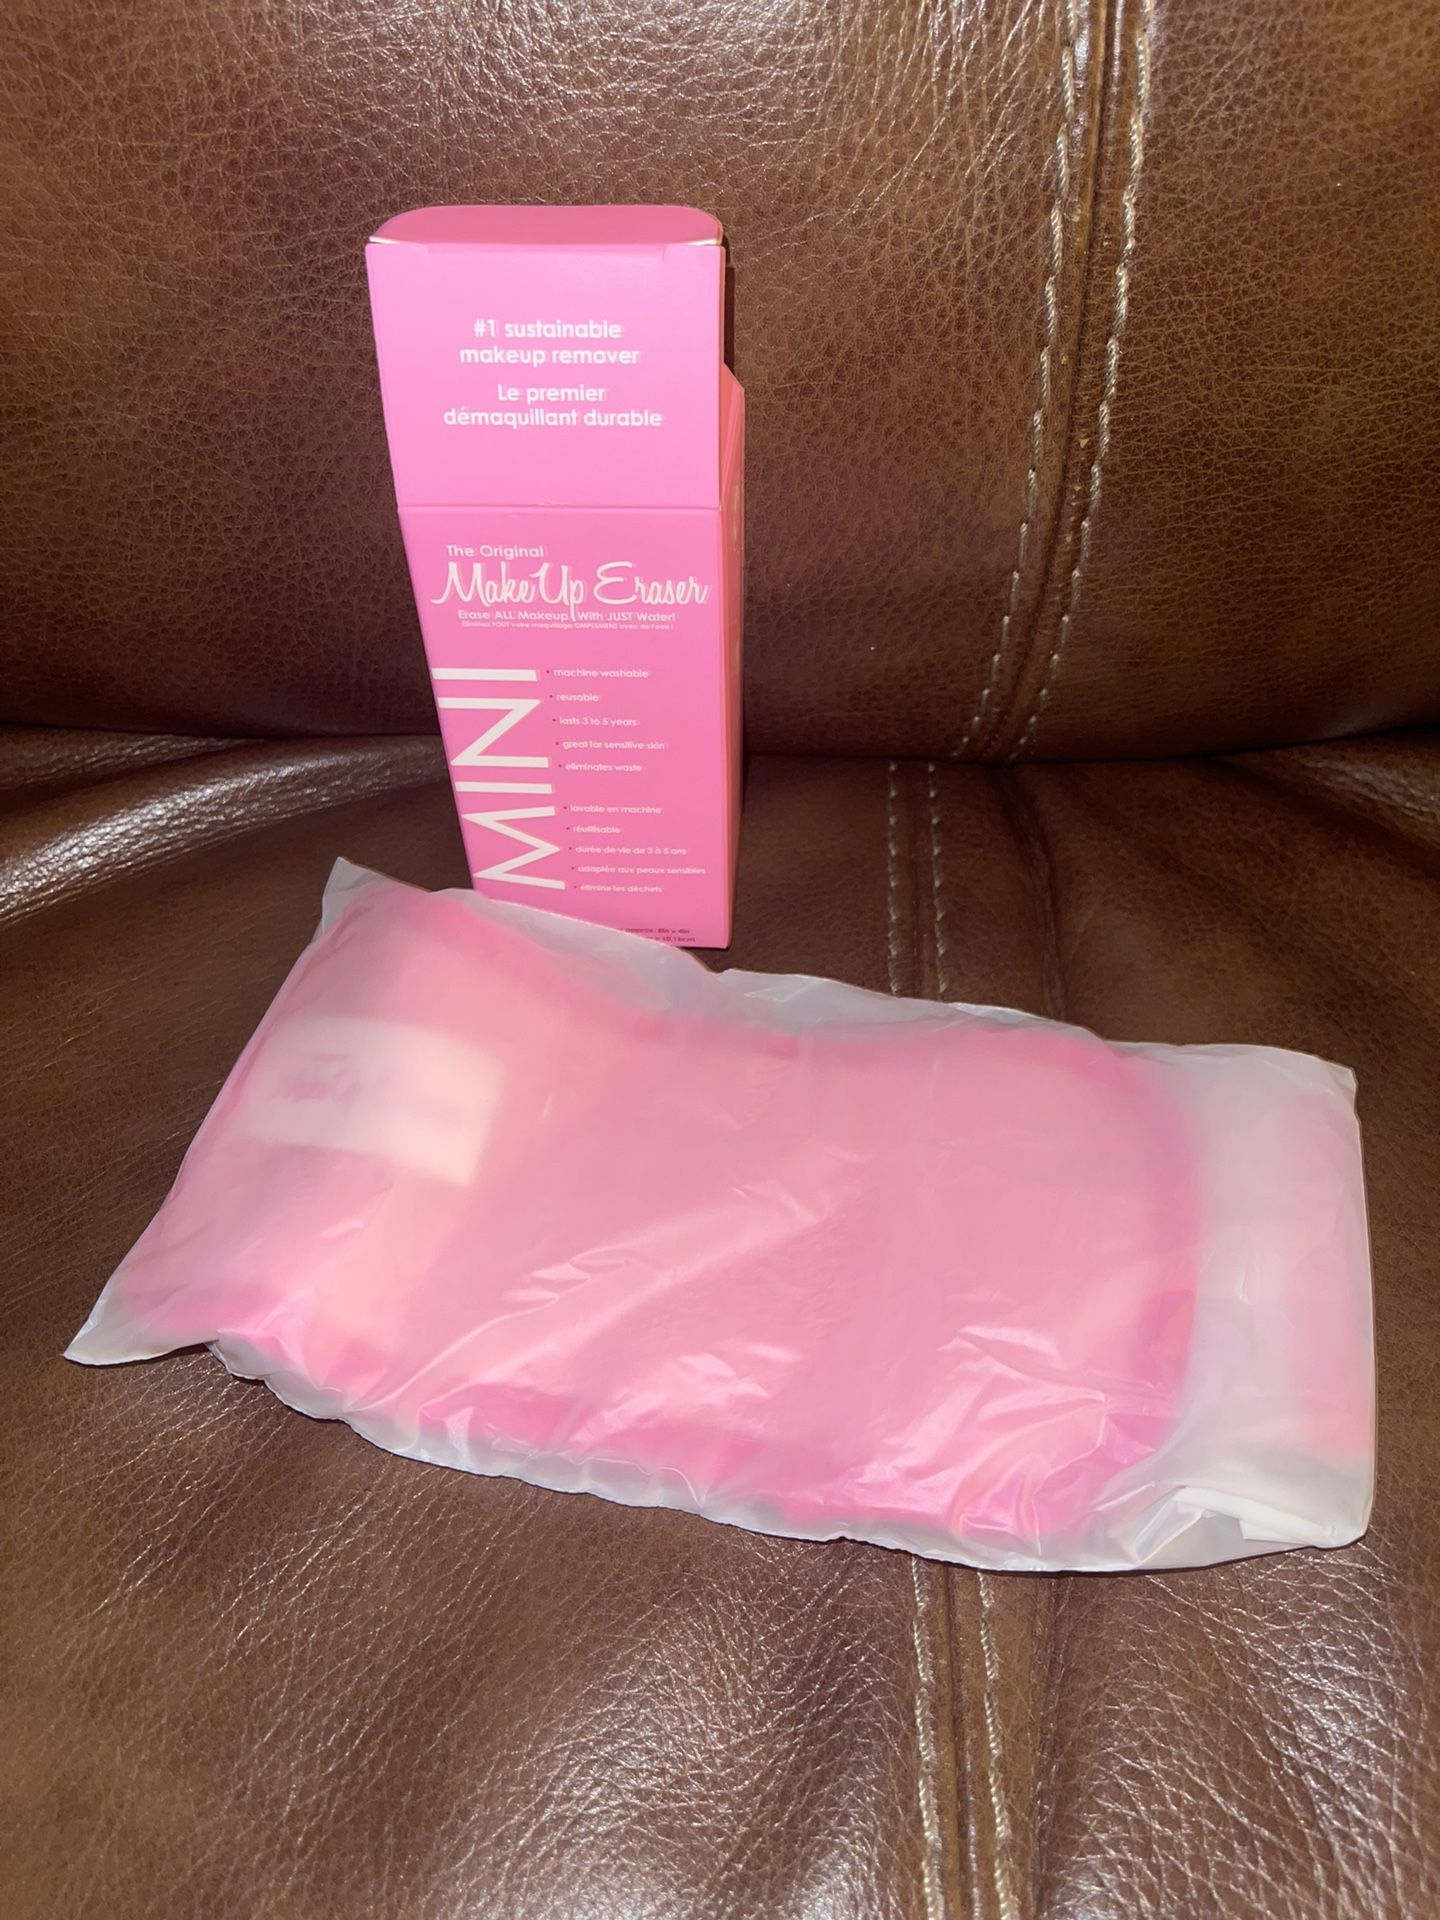 Mini Makeup Eraser in Original Pink